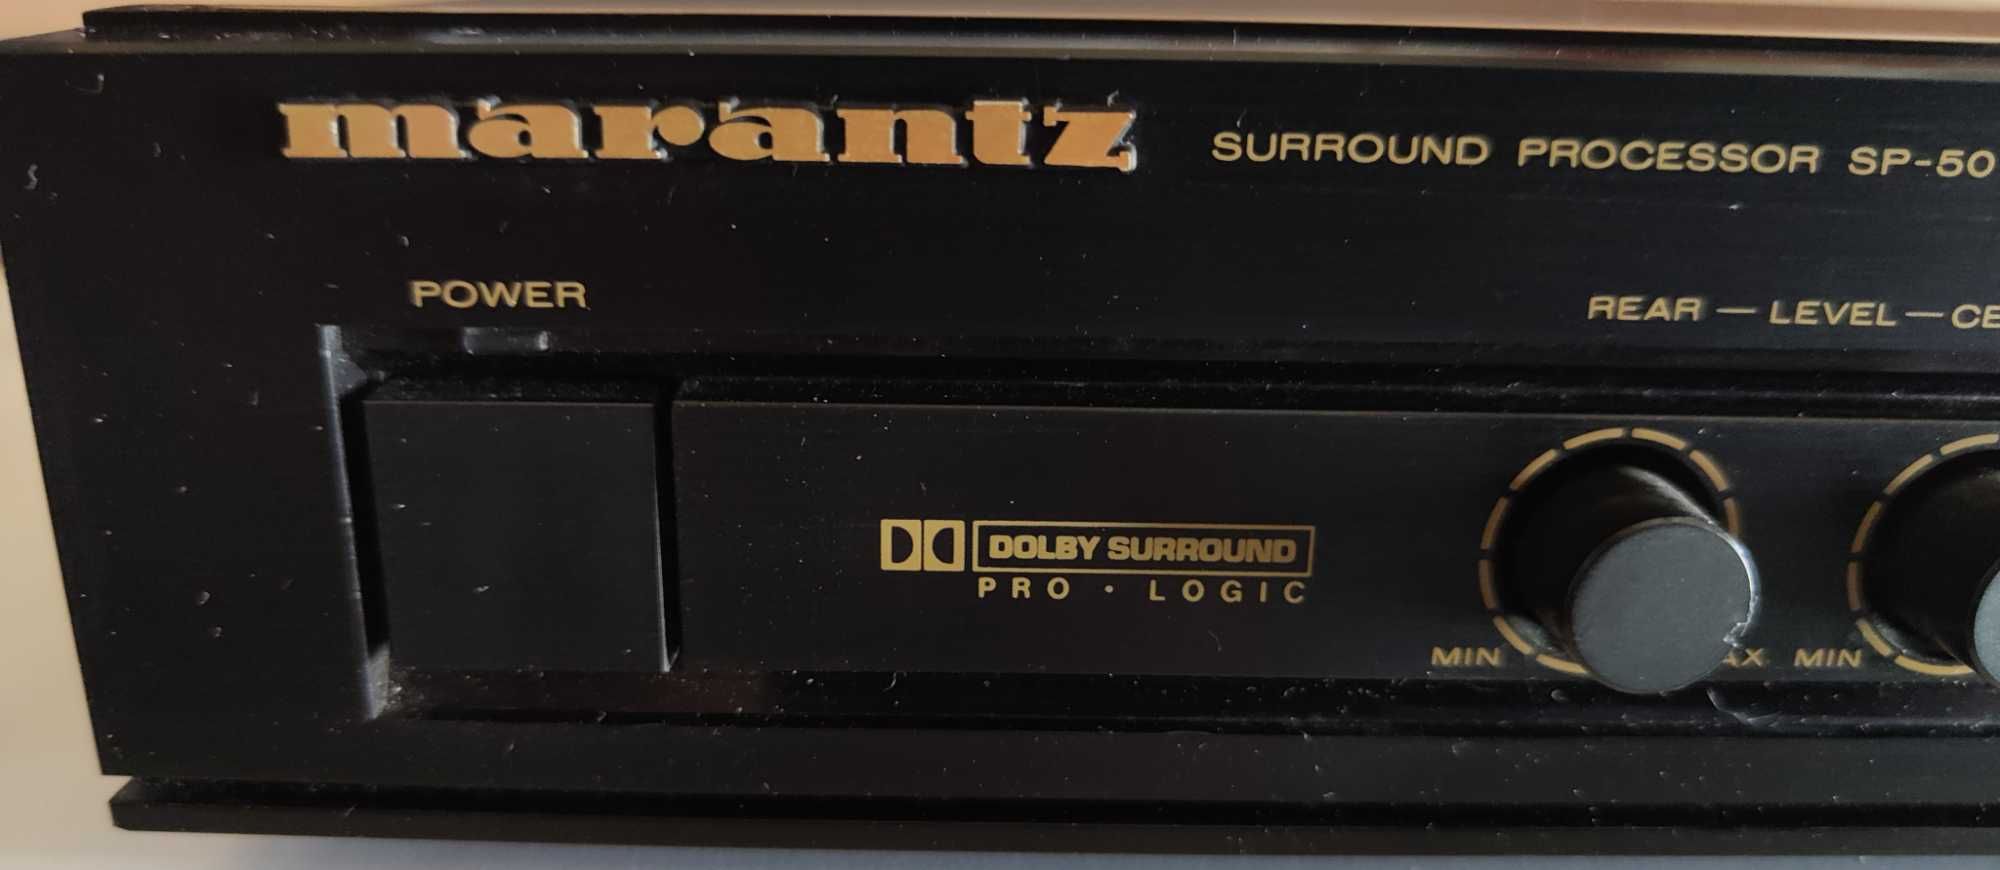 Marantz SP-50  Dolby Surround Processor